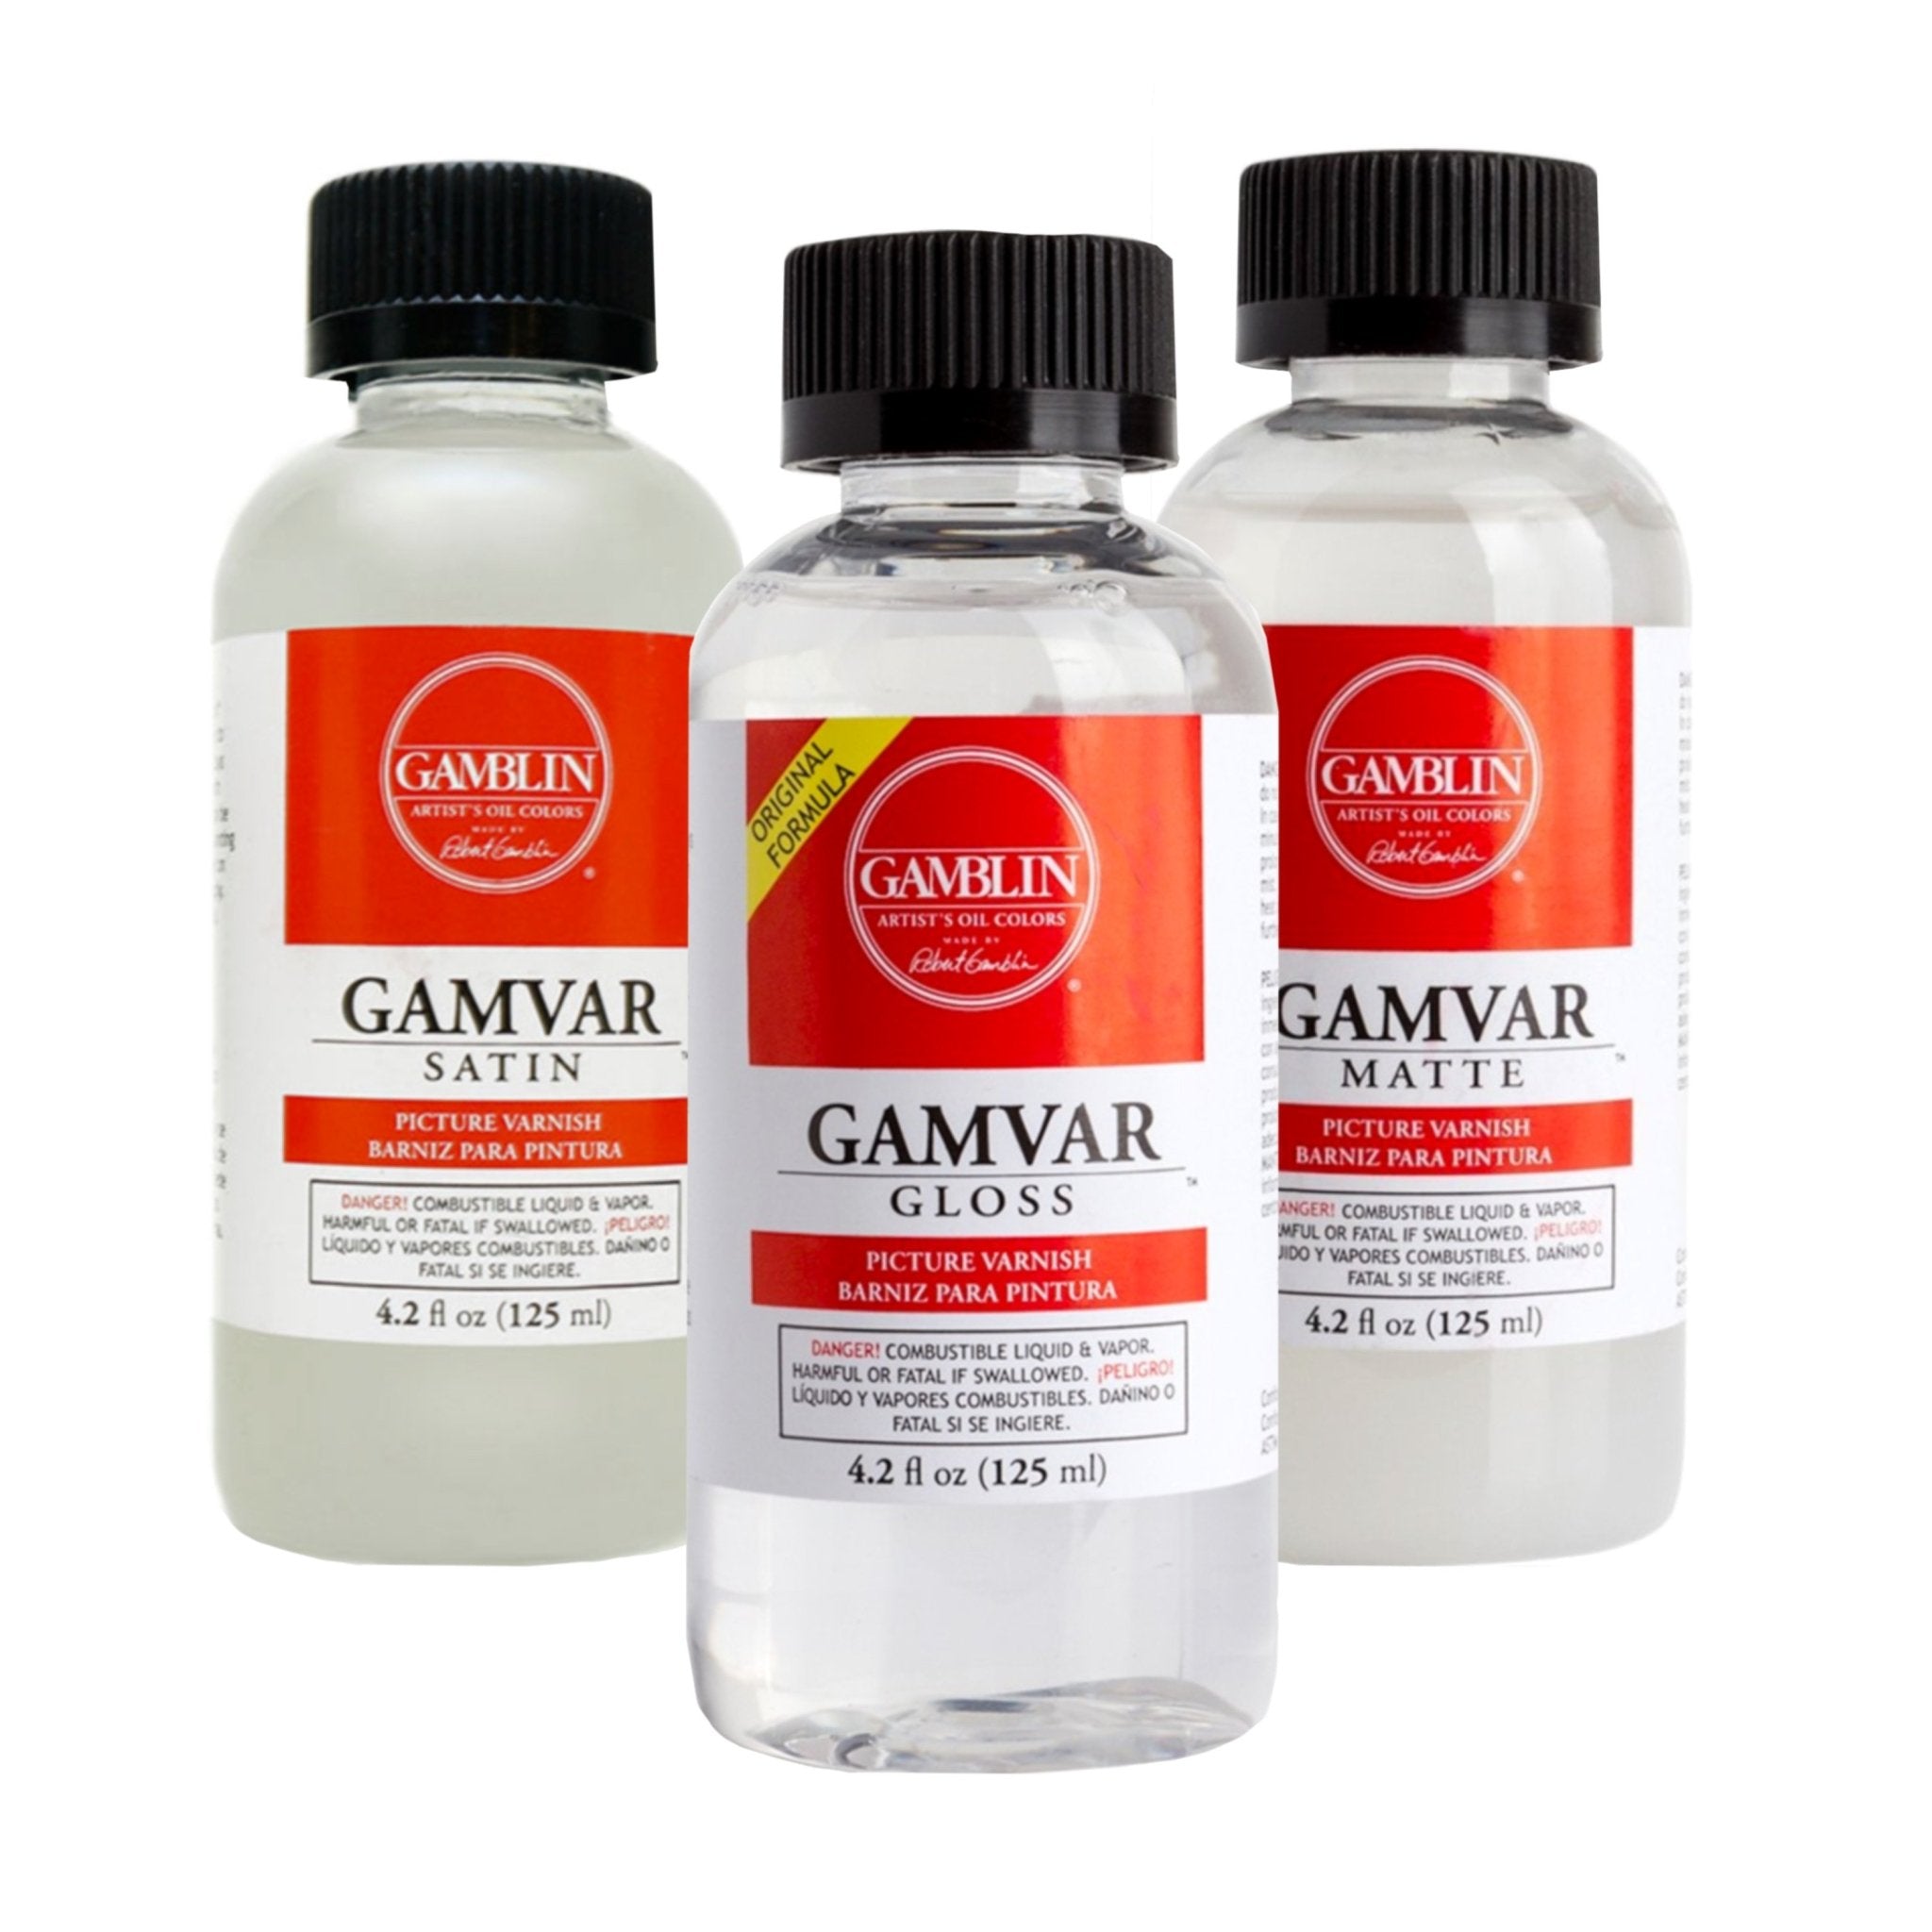 Gamblin Gamvar Gloss Picture Varnish 4.2 Fluid Ounce/125 mL, New